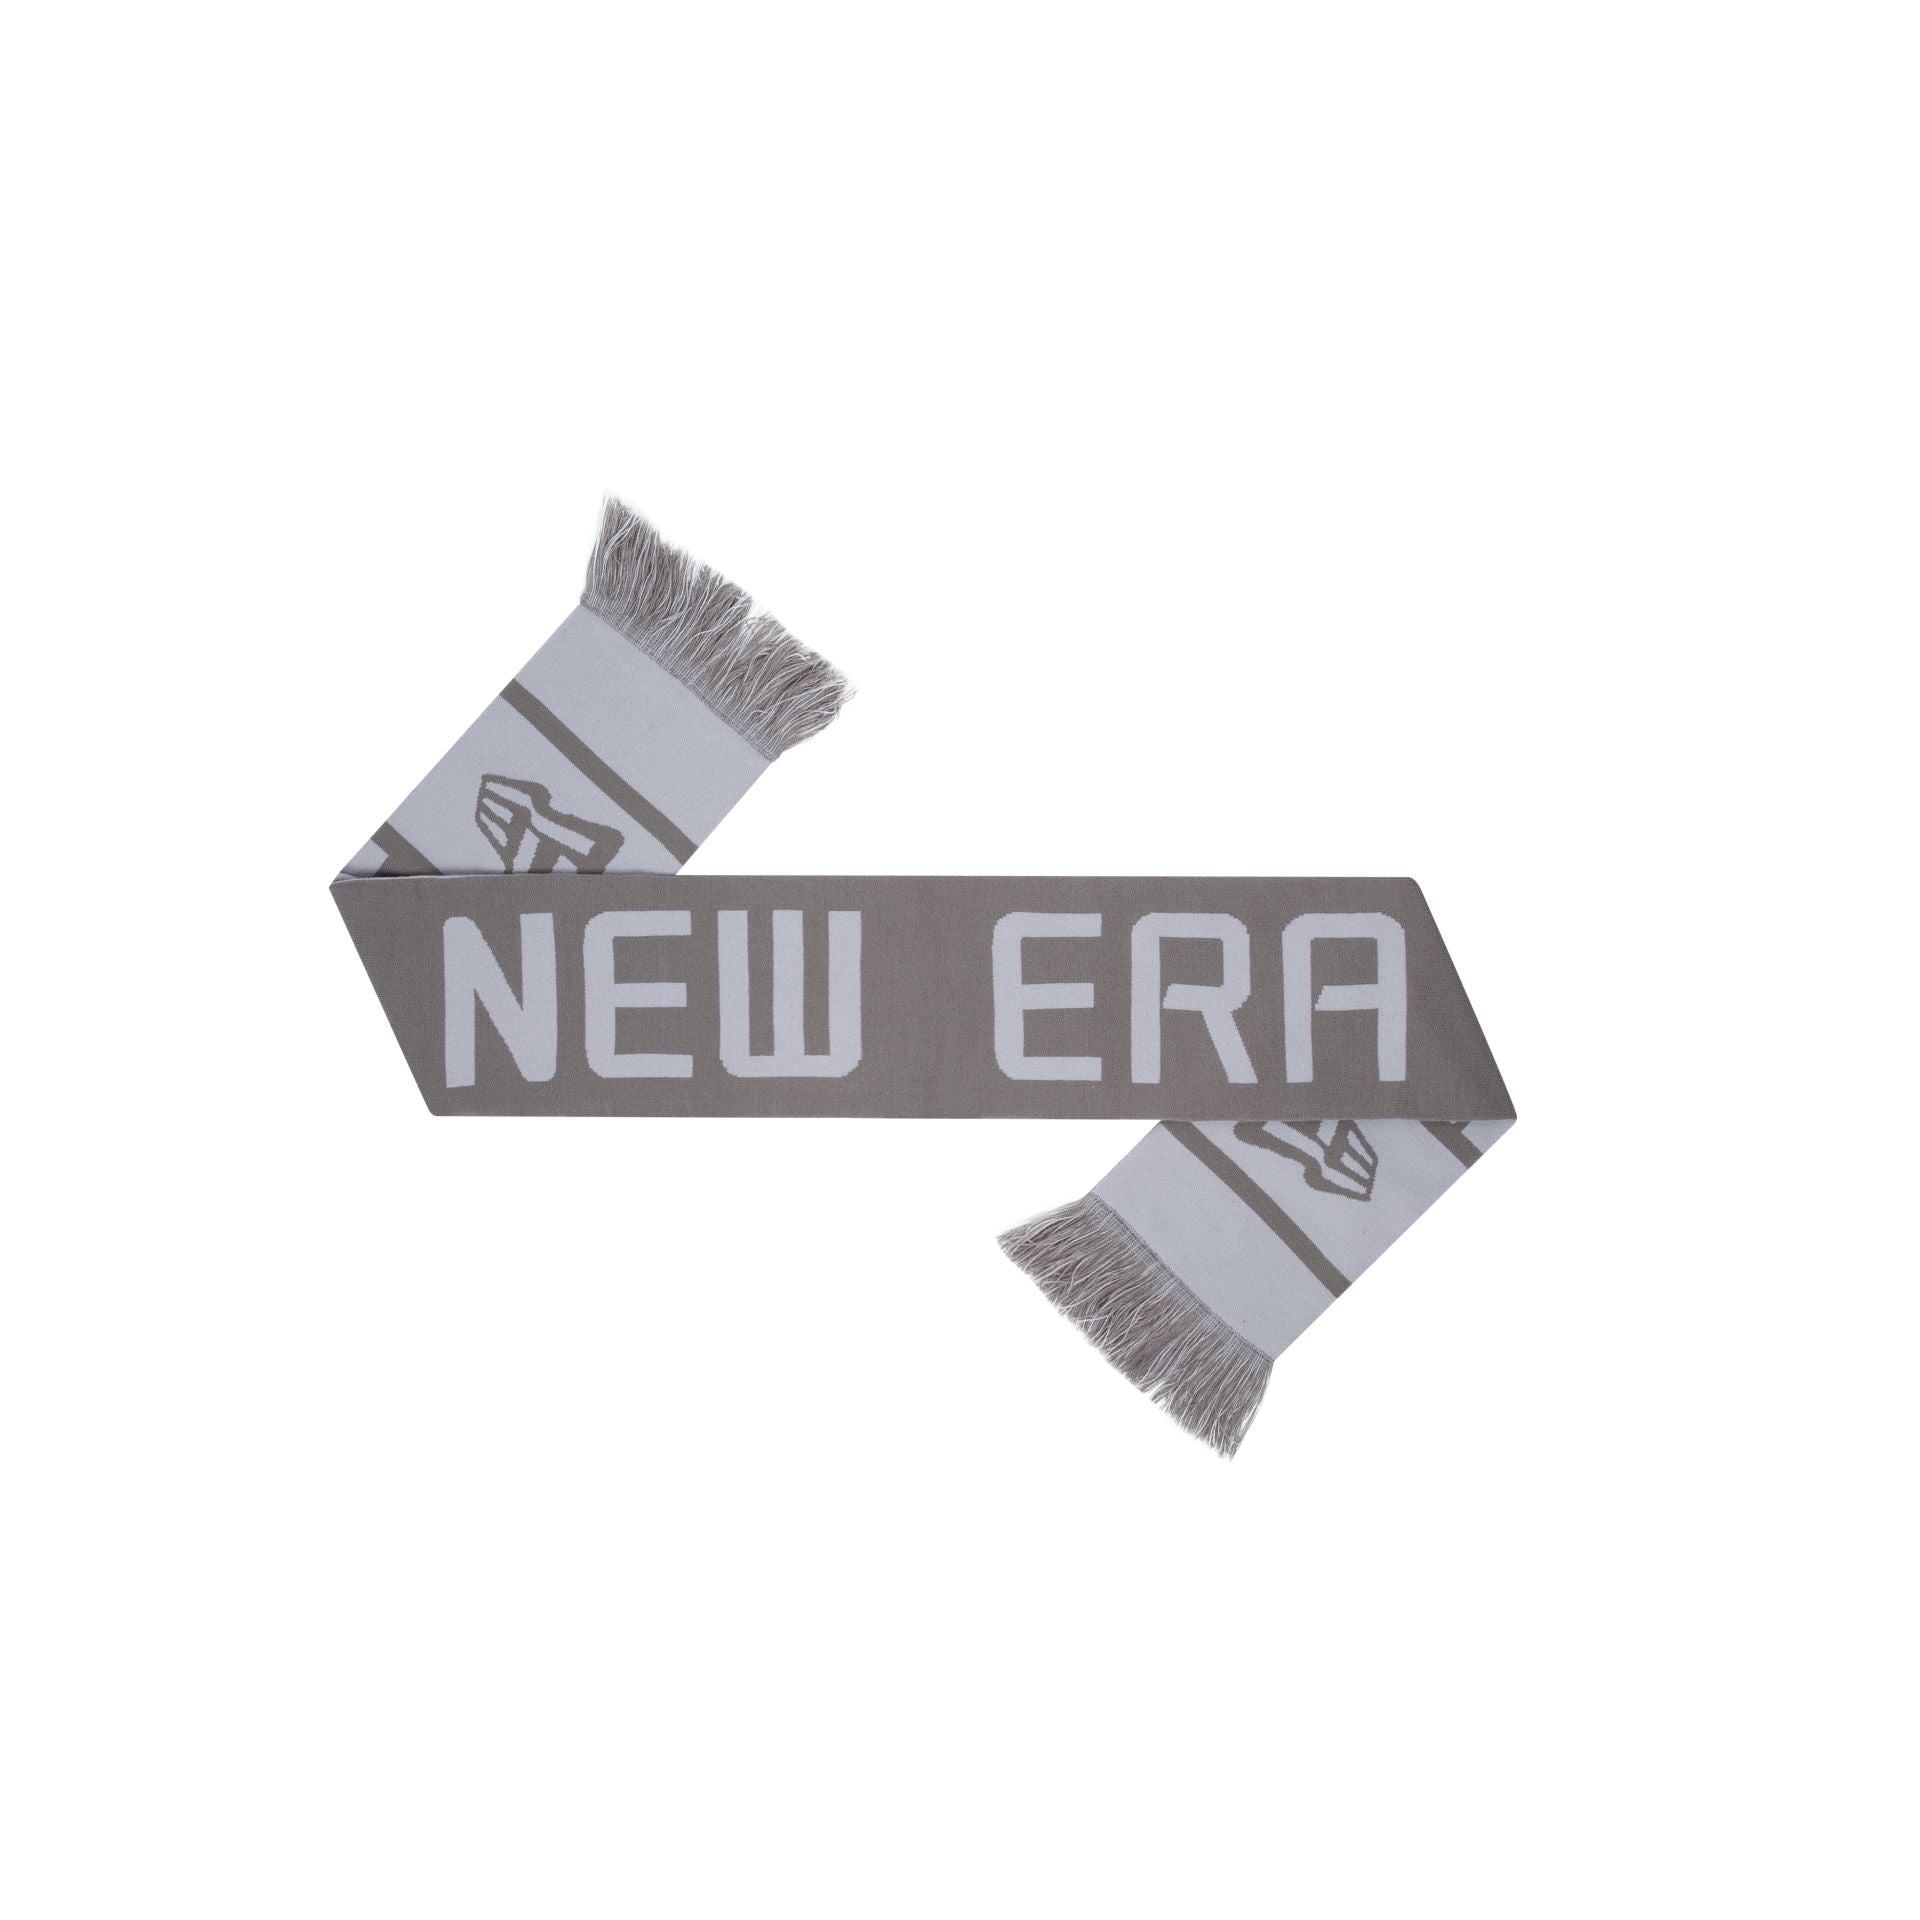 New Era Cap Lift Pass Scarf, Gray, by New Era